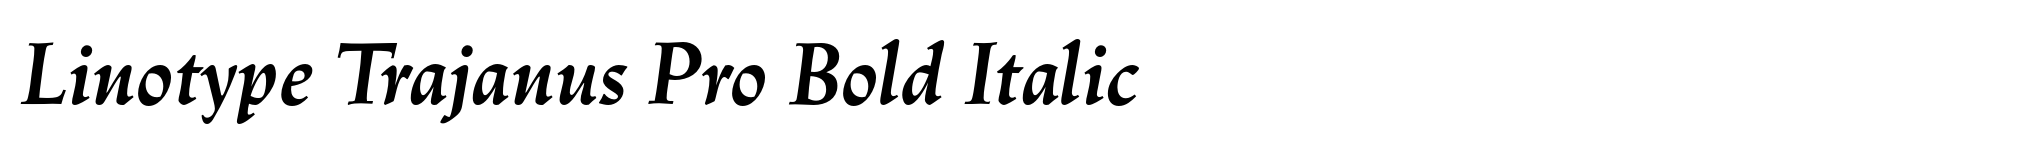 Linotype Trajanus Pro Bold Italic image